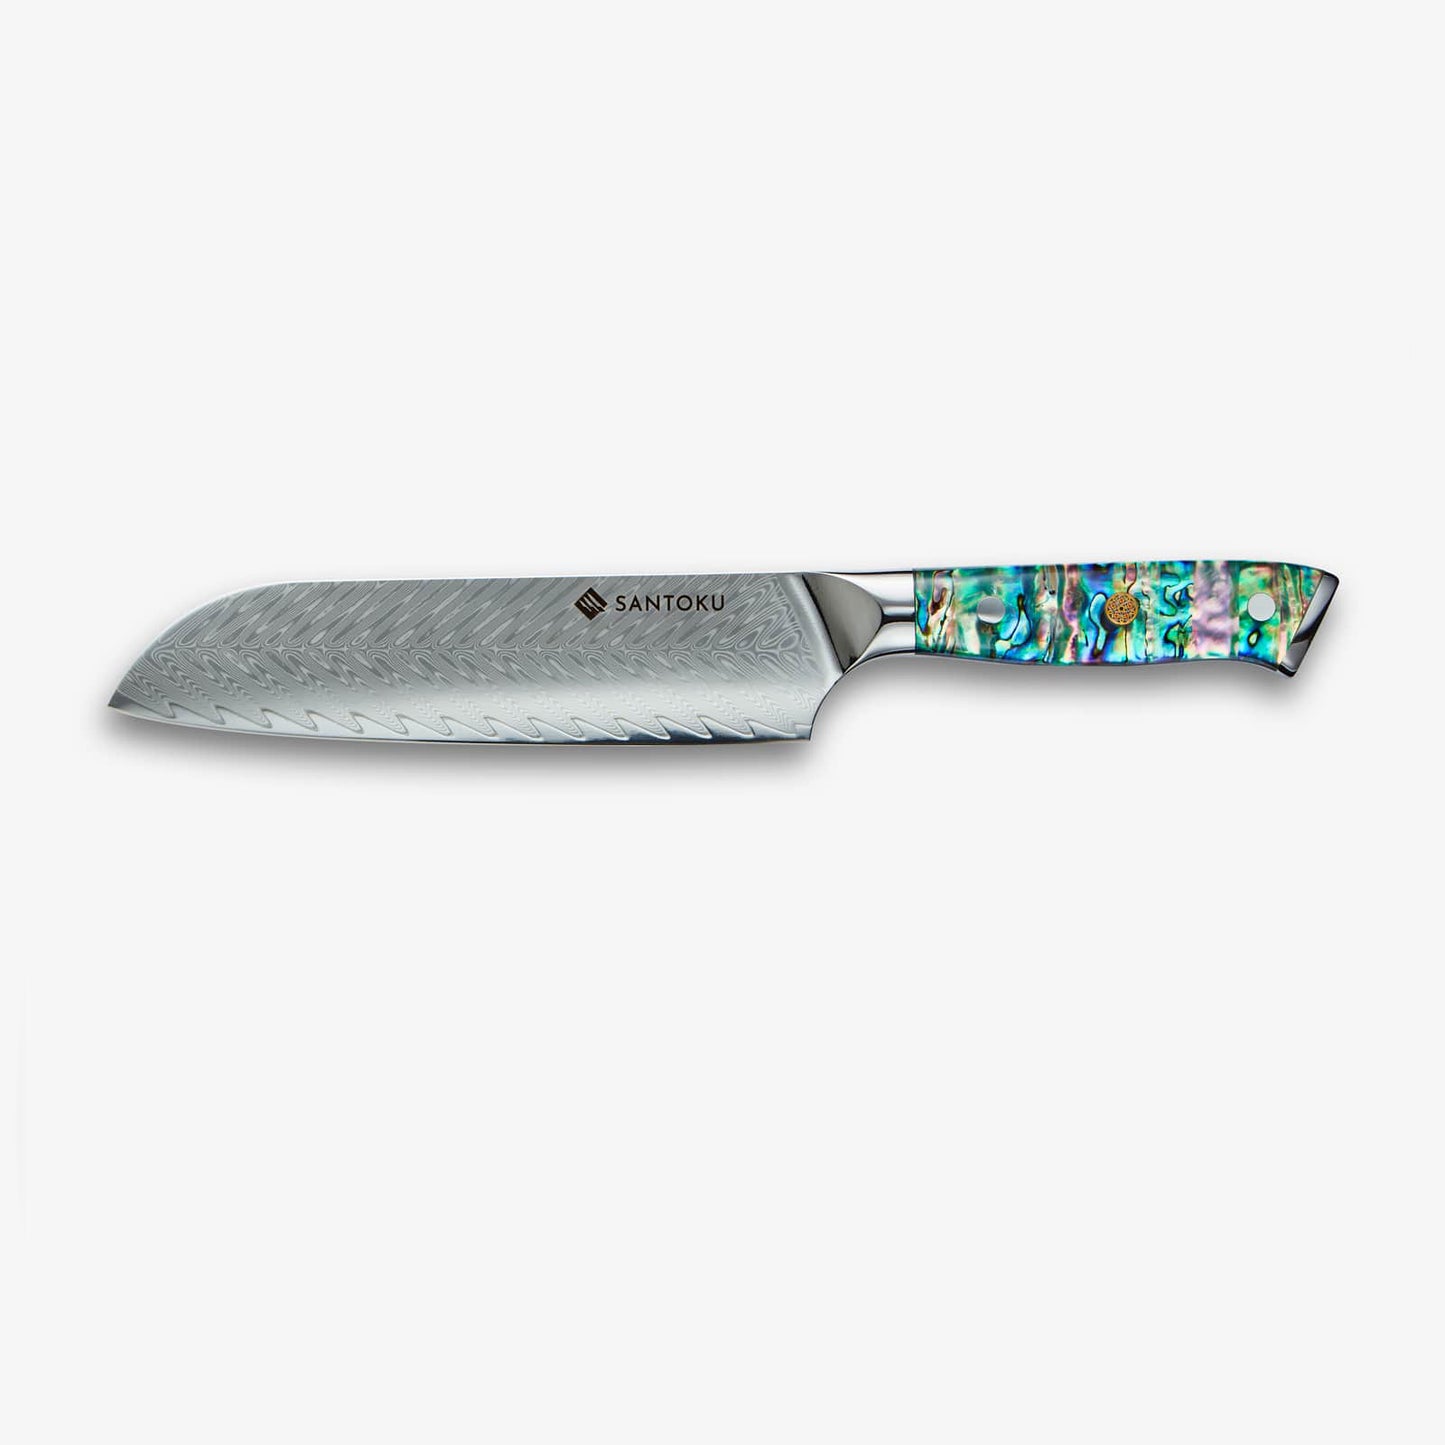 Chikashi (ちかし) Damaskus -Stahlmesser mit Abalone Griff